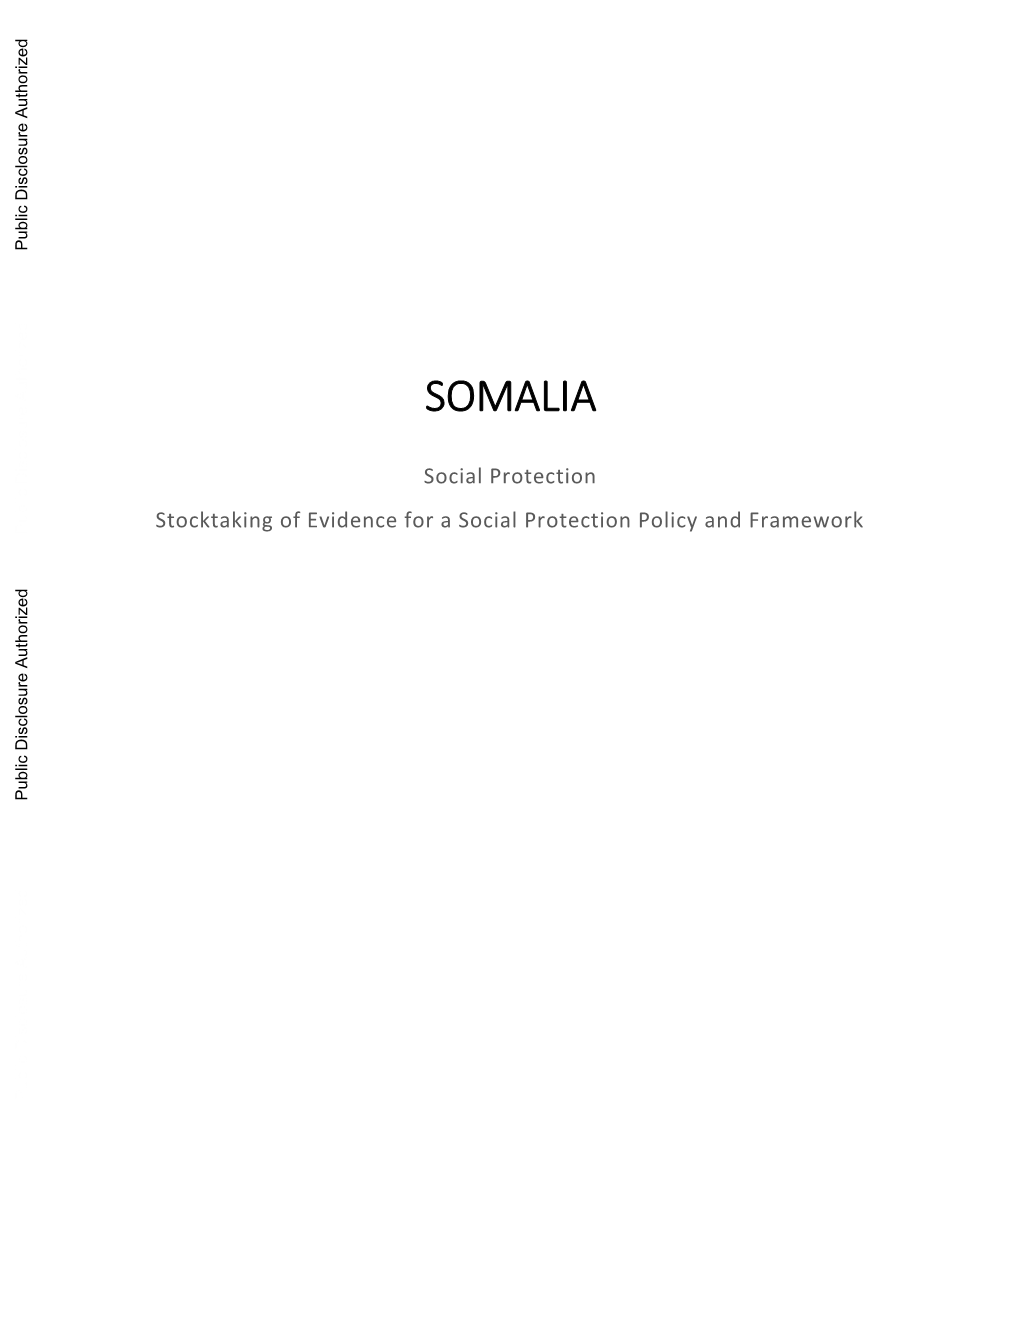 Somalia's Social Protection